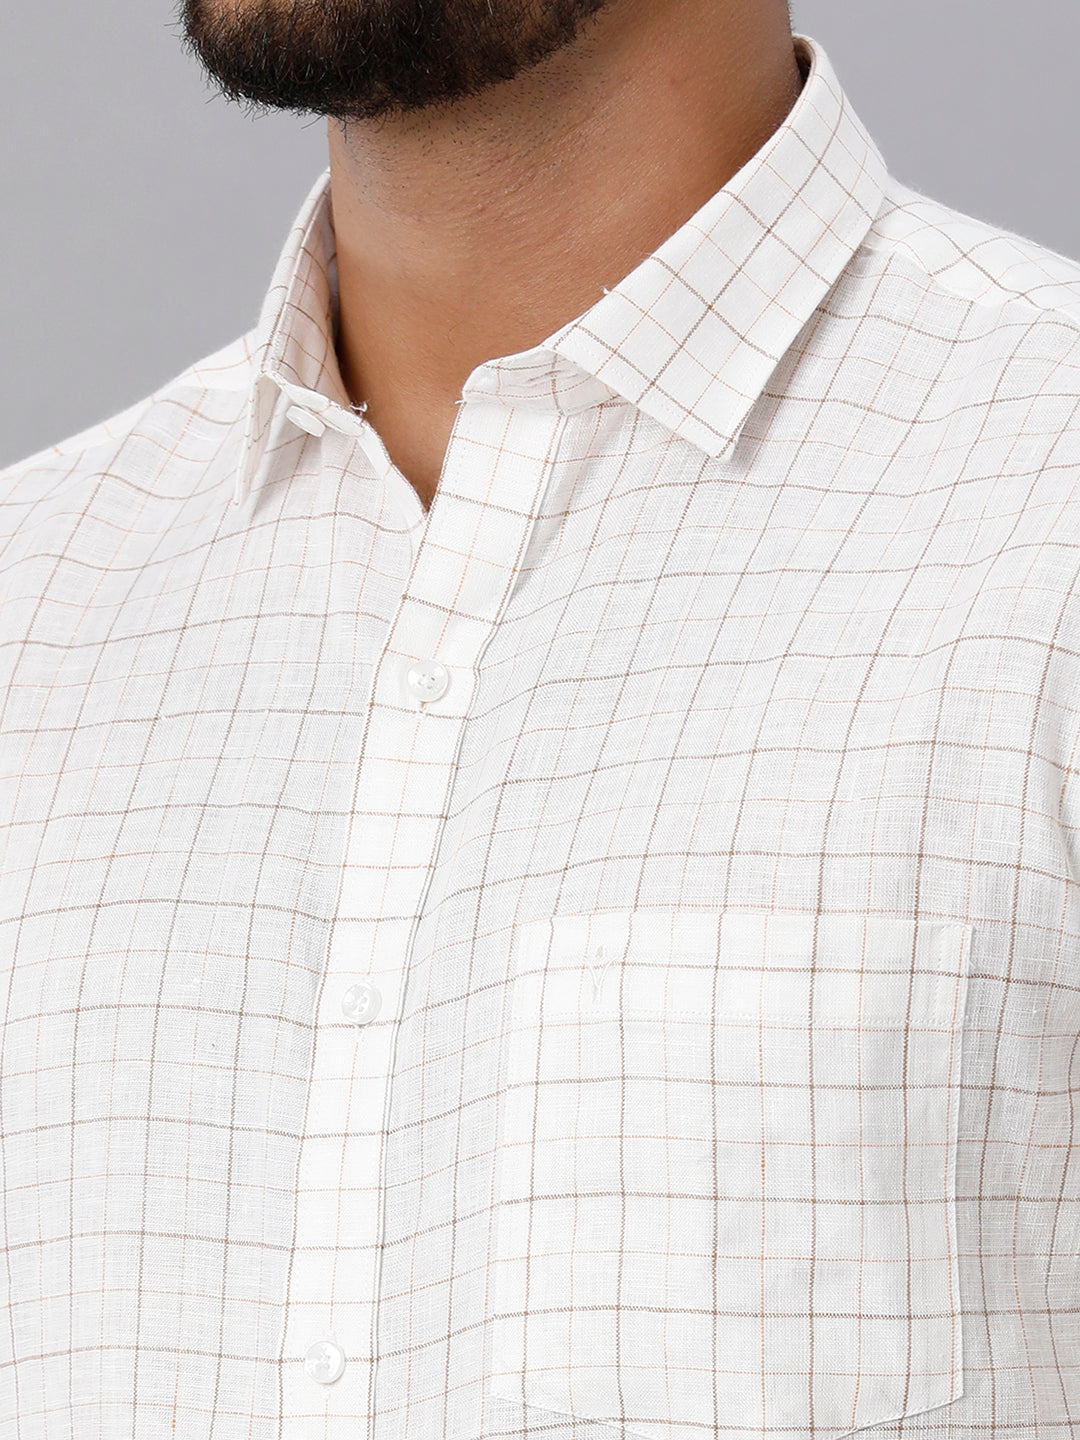 Mens Pure Linen Checked Half Sleeves Light Cream Shirt LS36-Zoom view